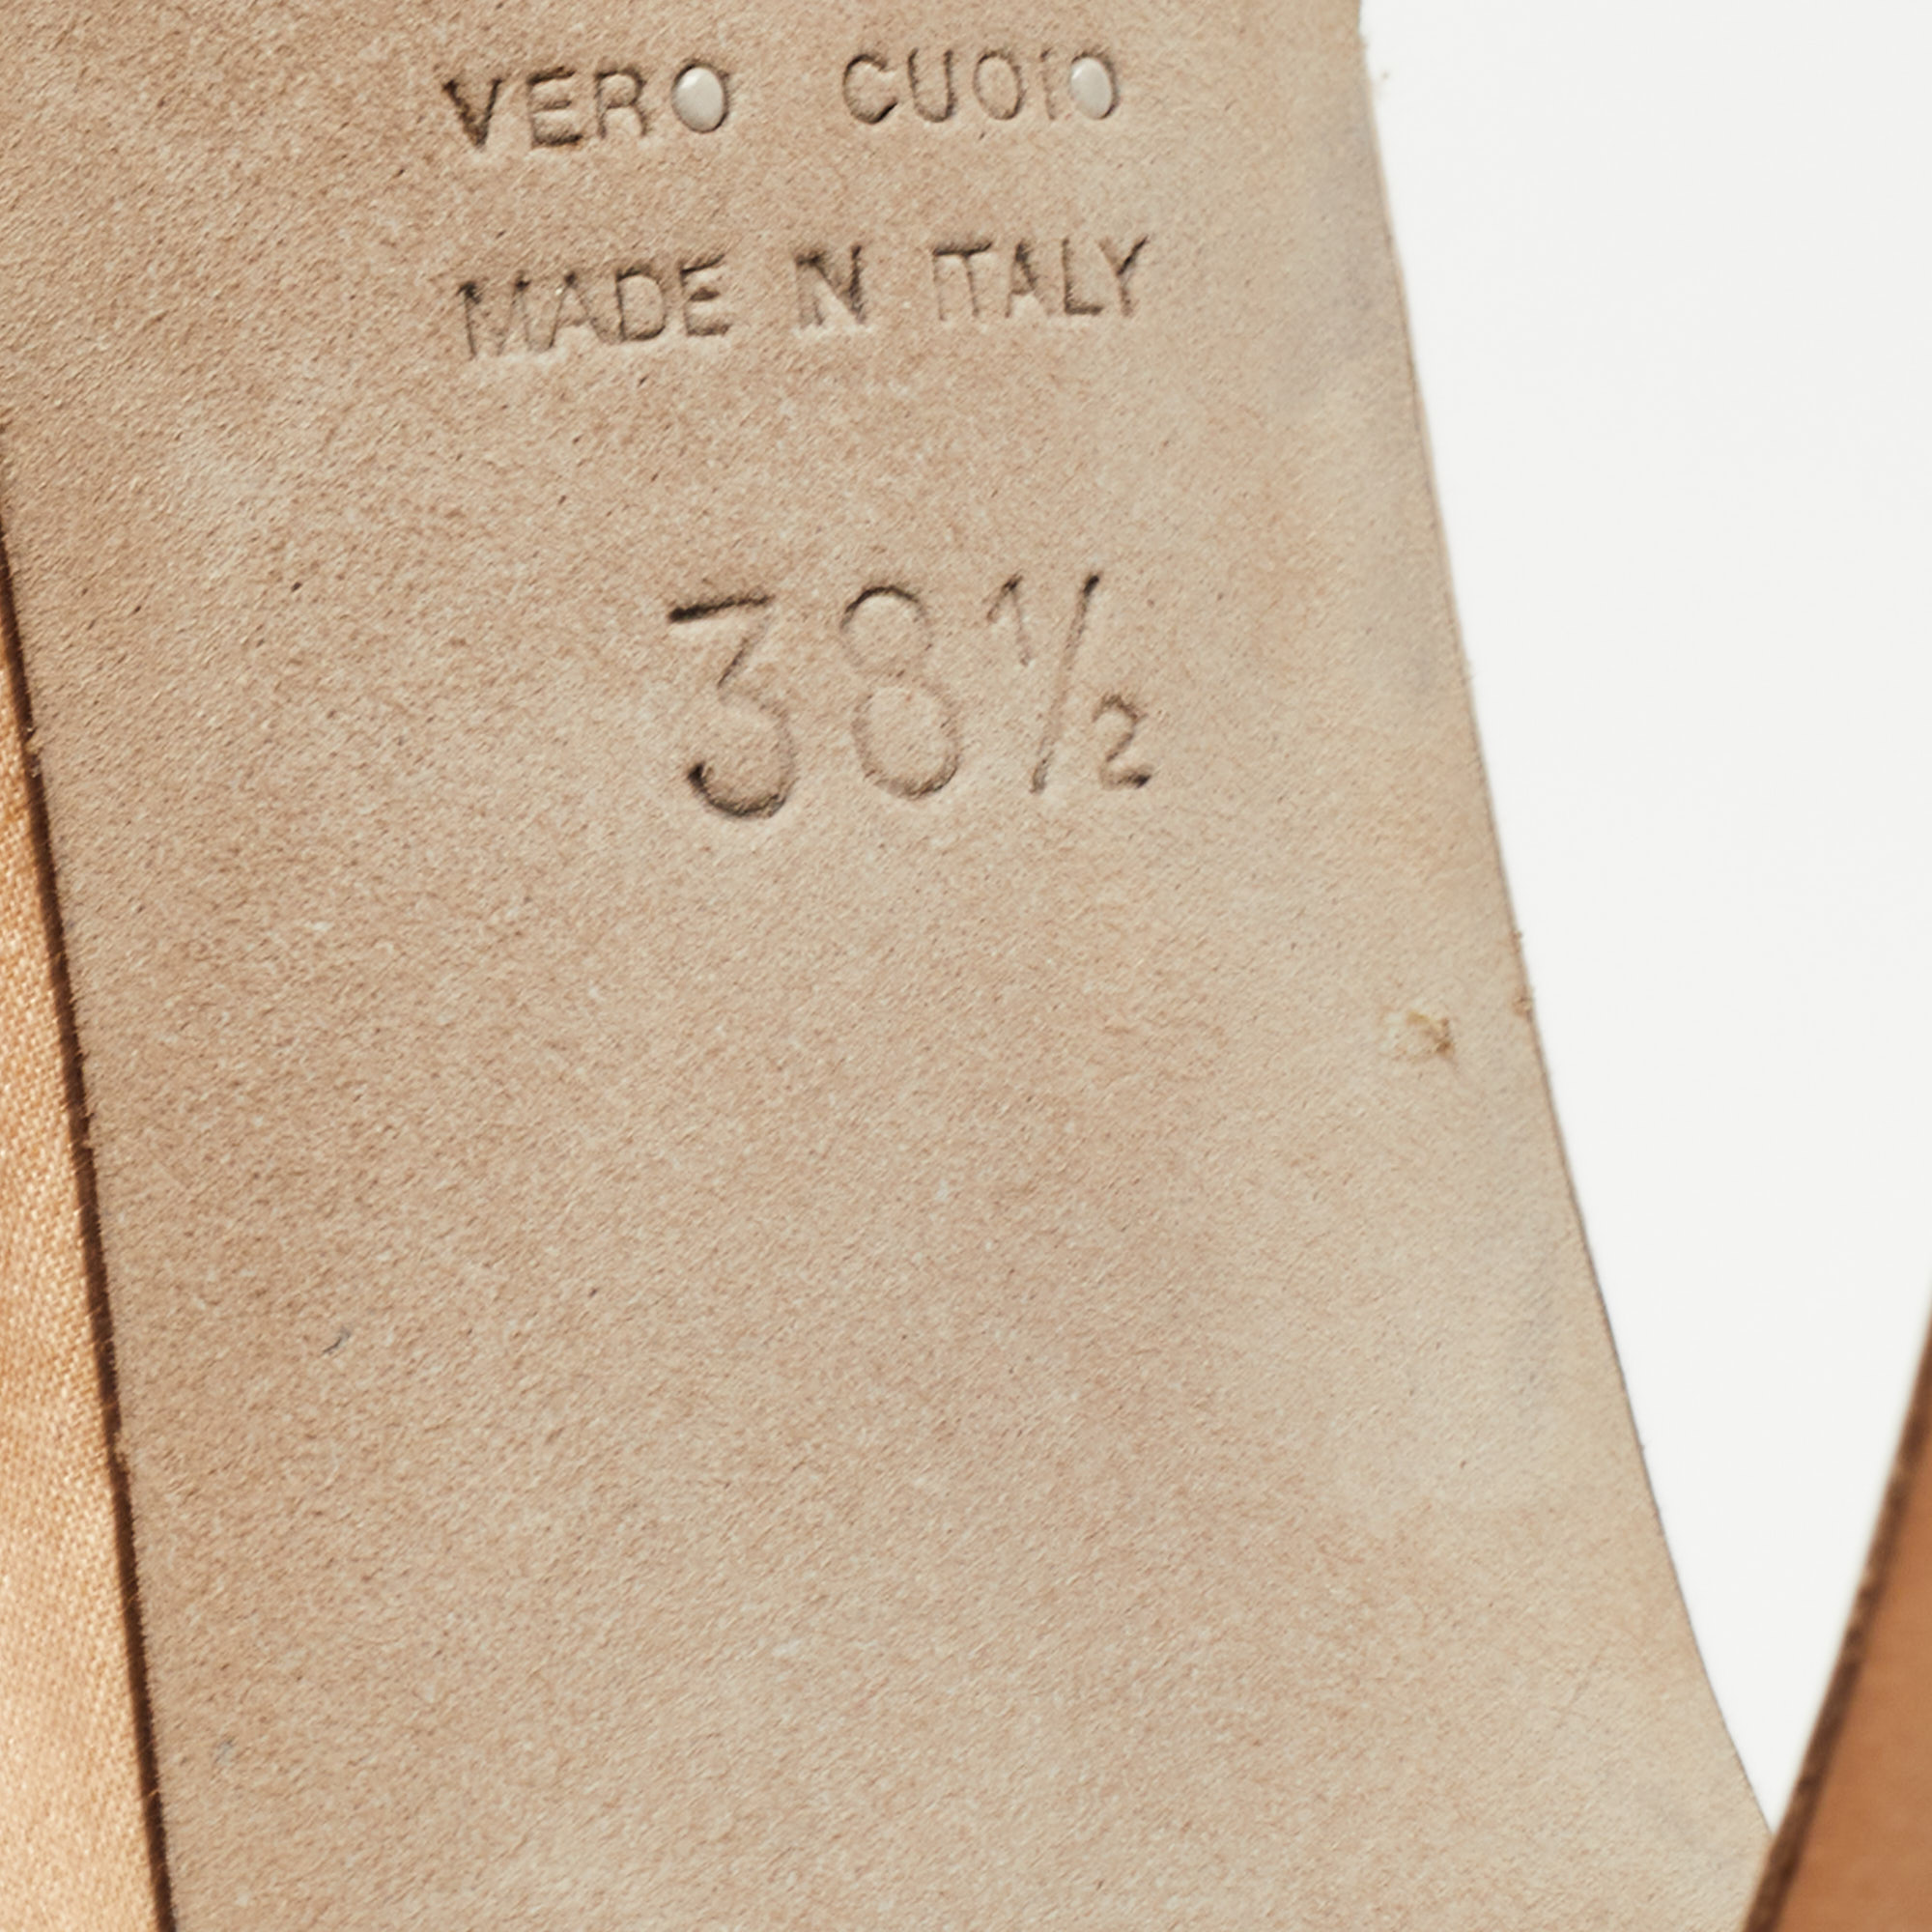 Sergio Rossi Light Brown Satin Crystal Embellished Ankle Strap Sandals Size 38.5